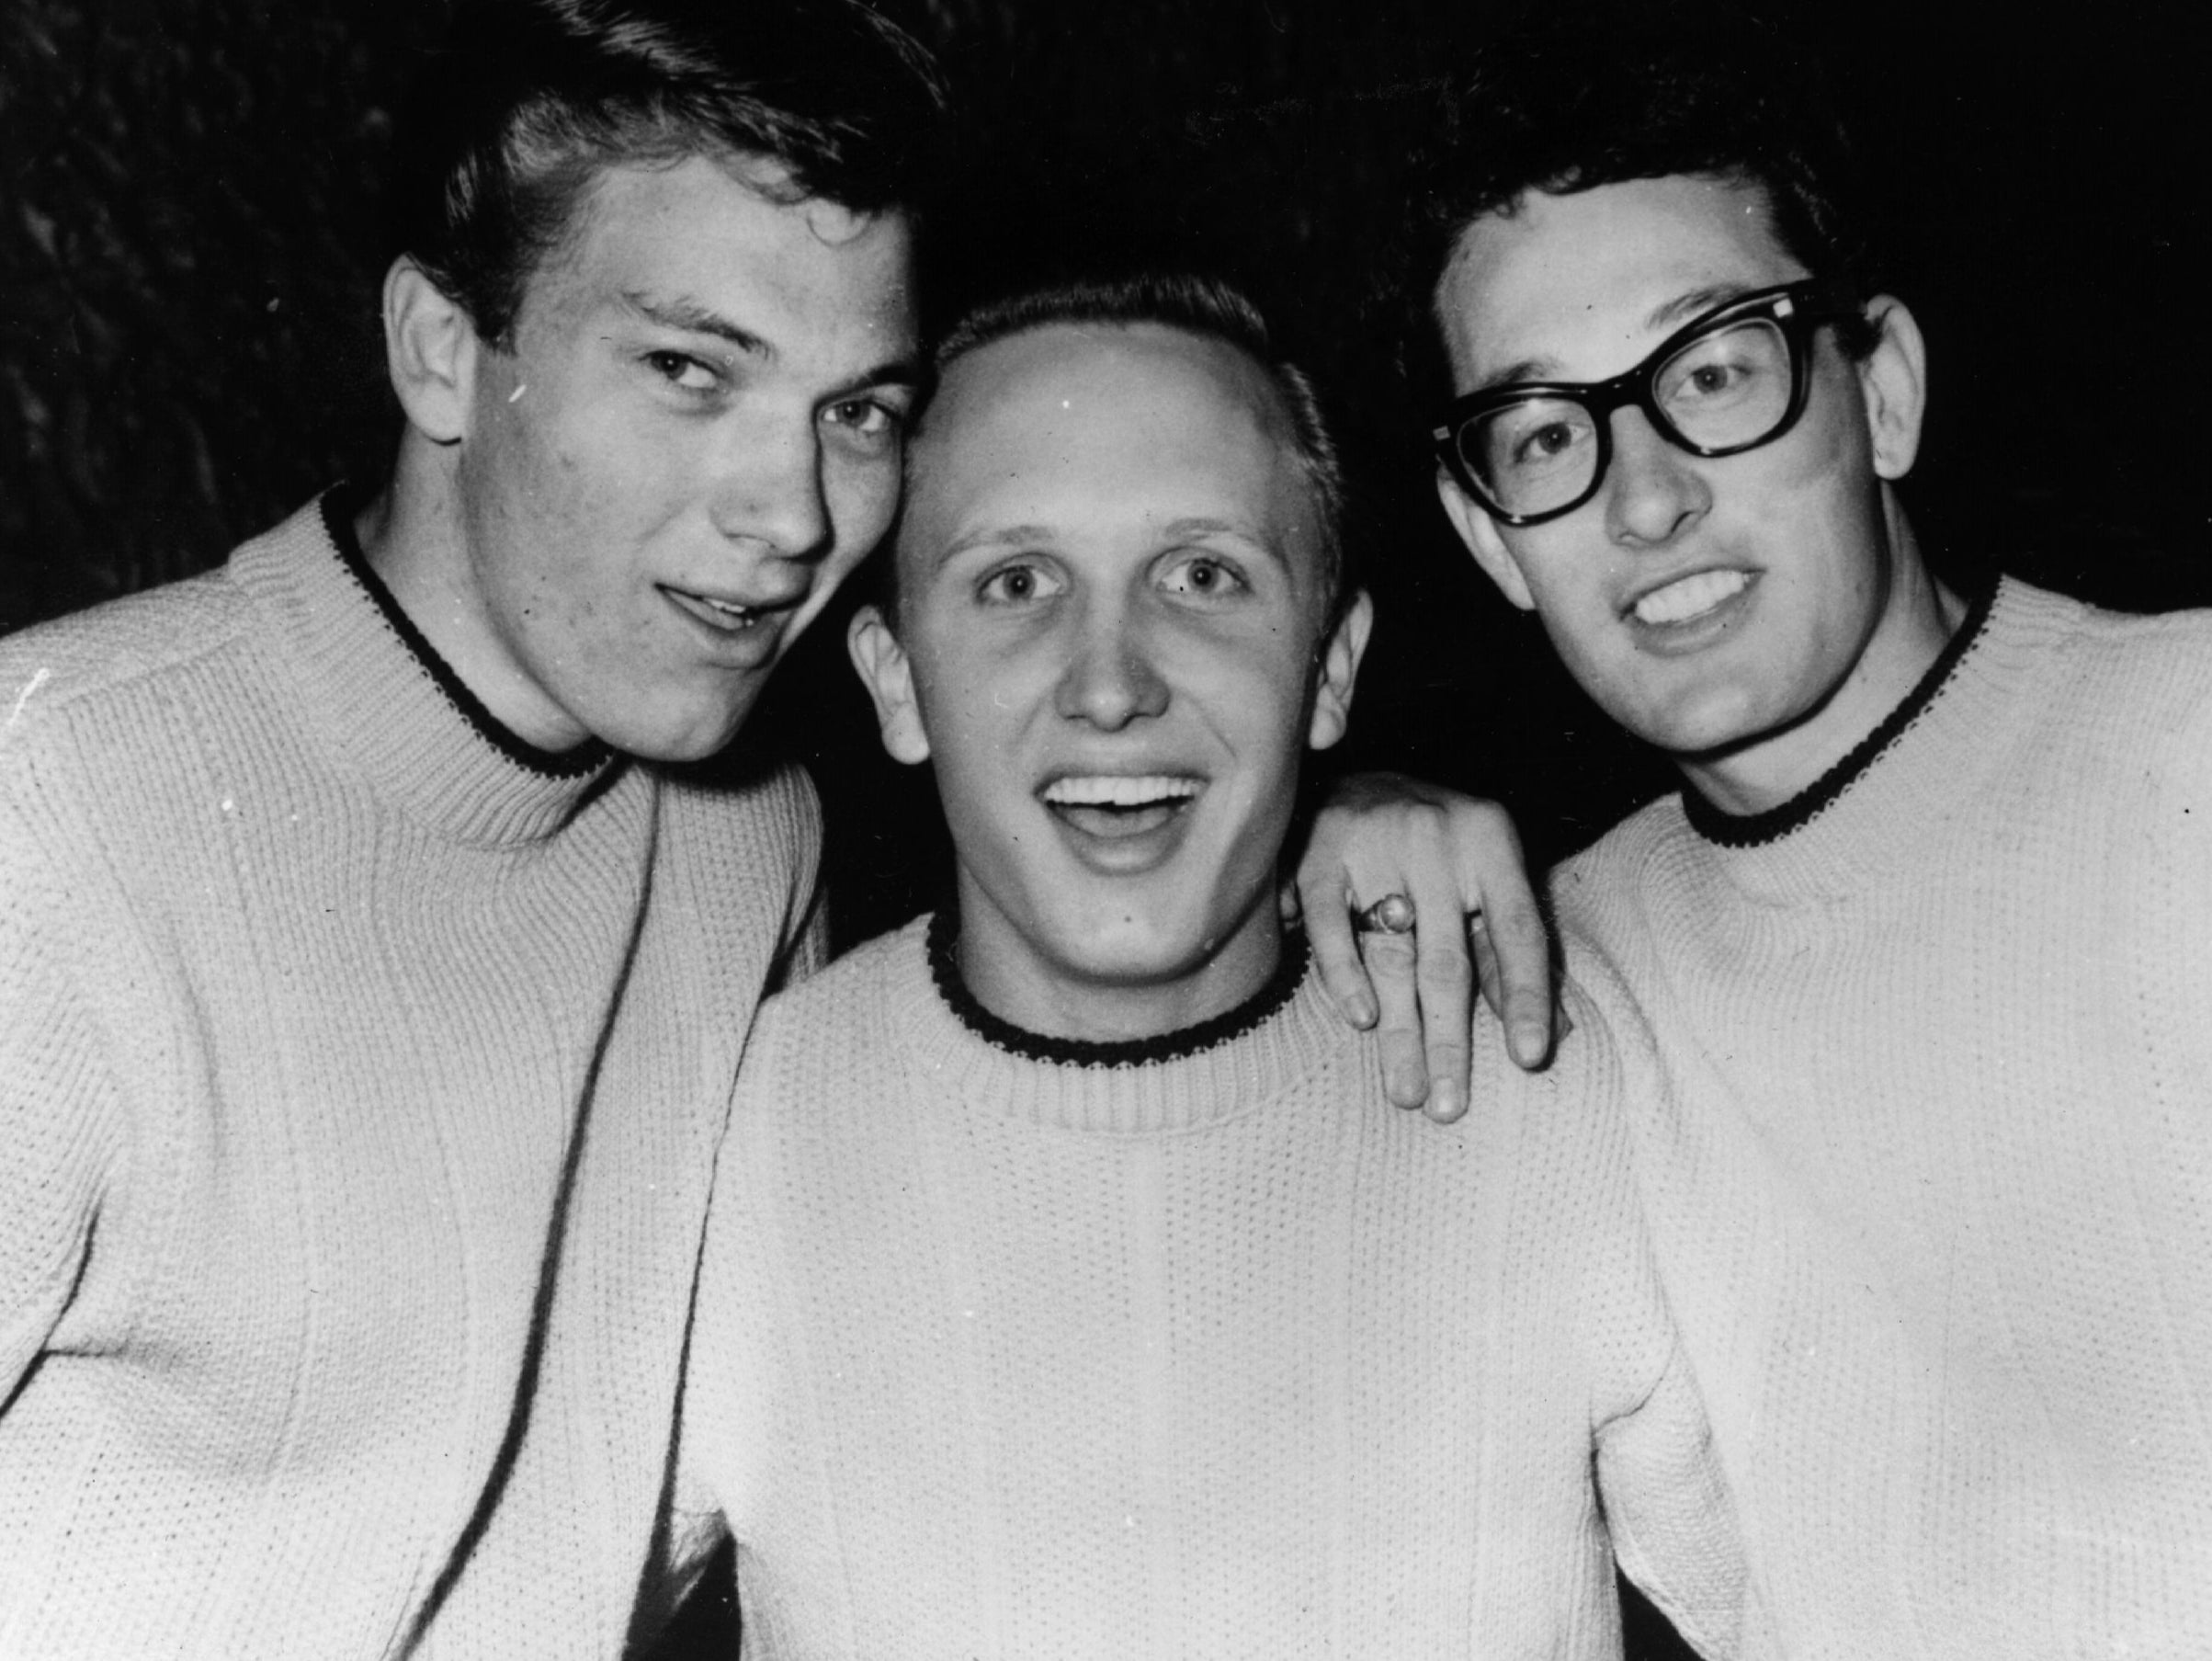 Jerry Allison (left) with bandmates Joe Mauldin and Buddy Holly